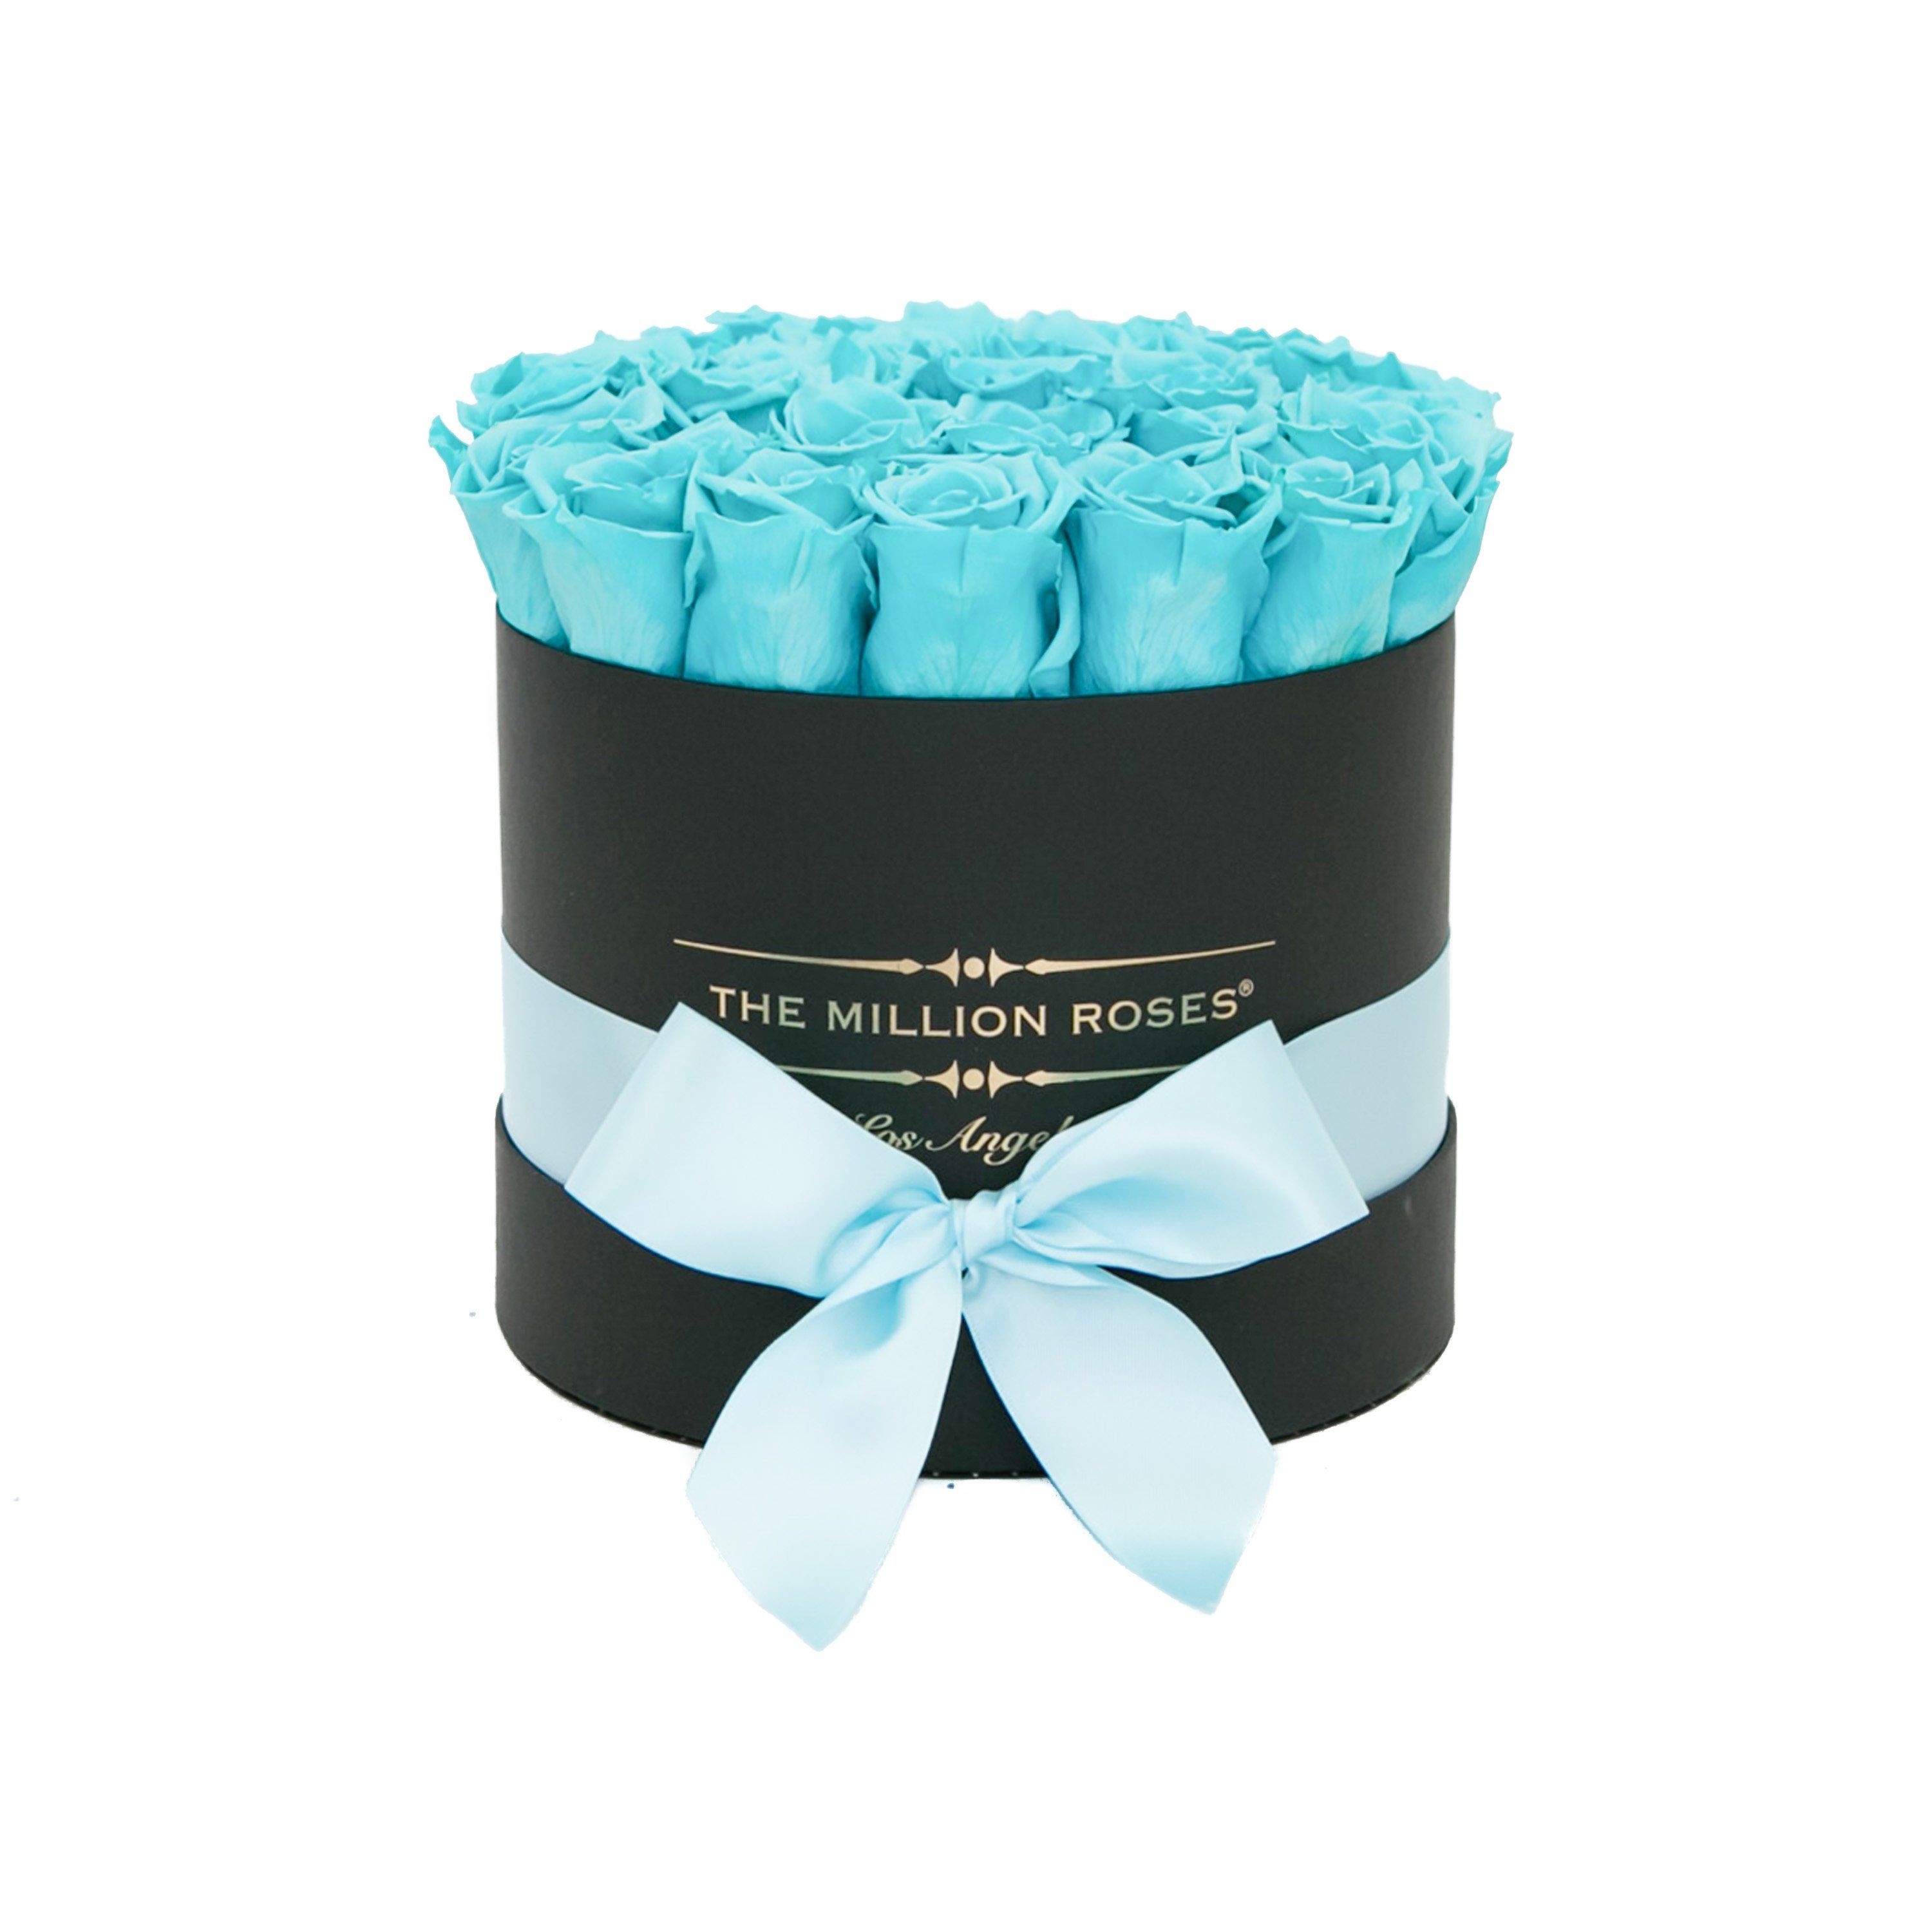 classic round box - black - tiffany-blue roses tiffany-blue eternity roses - the million roses